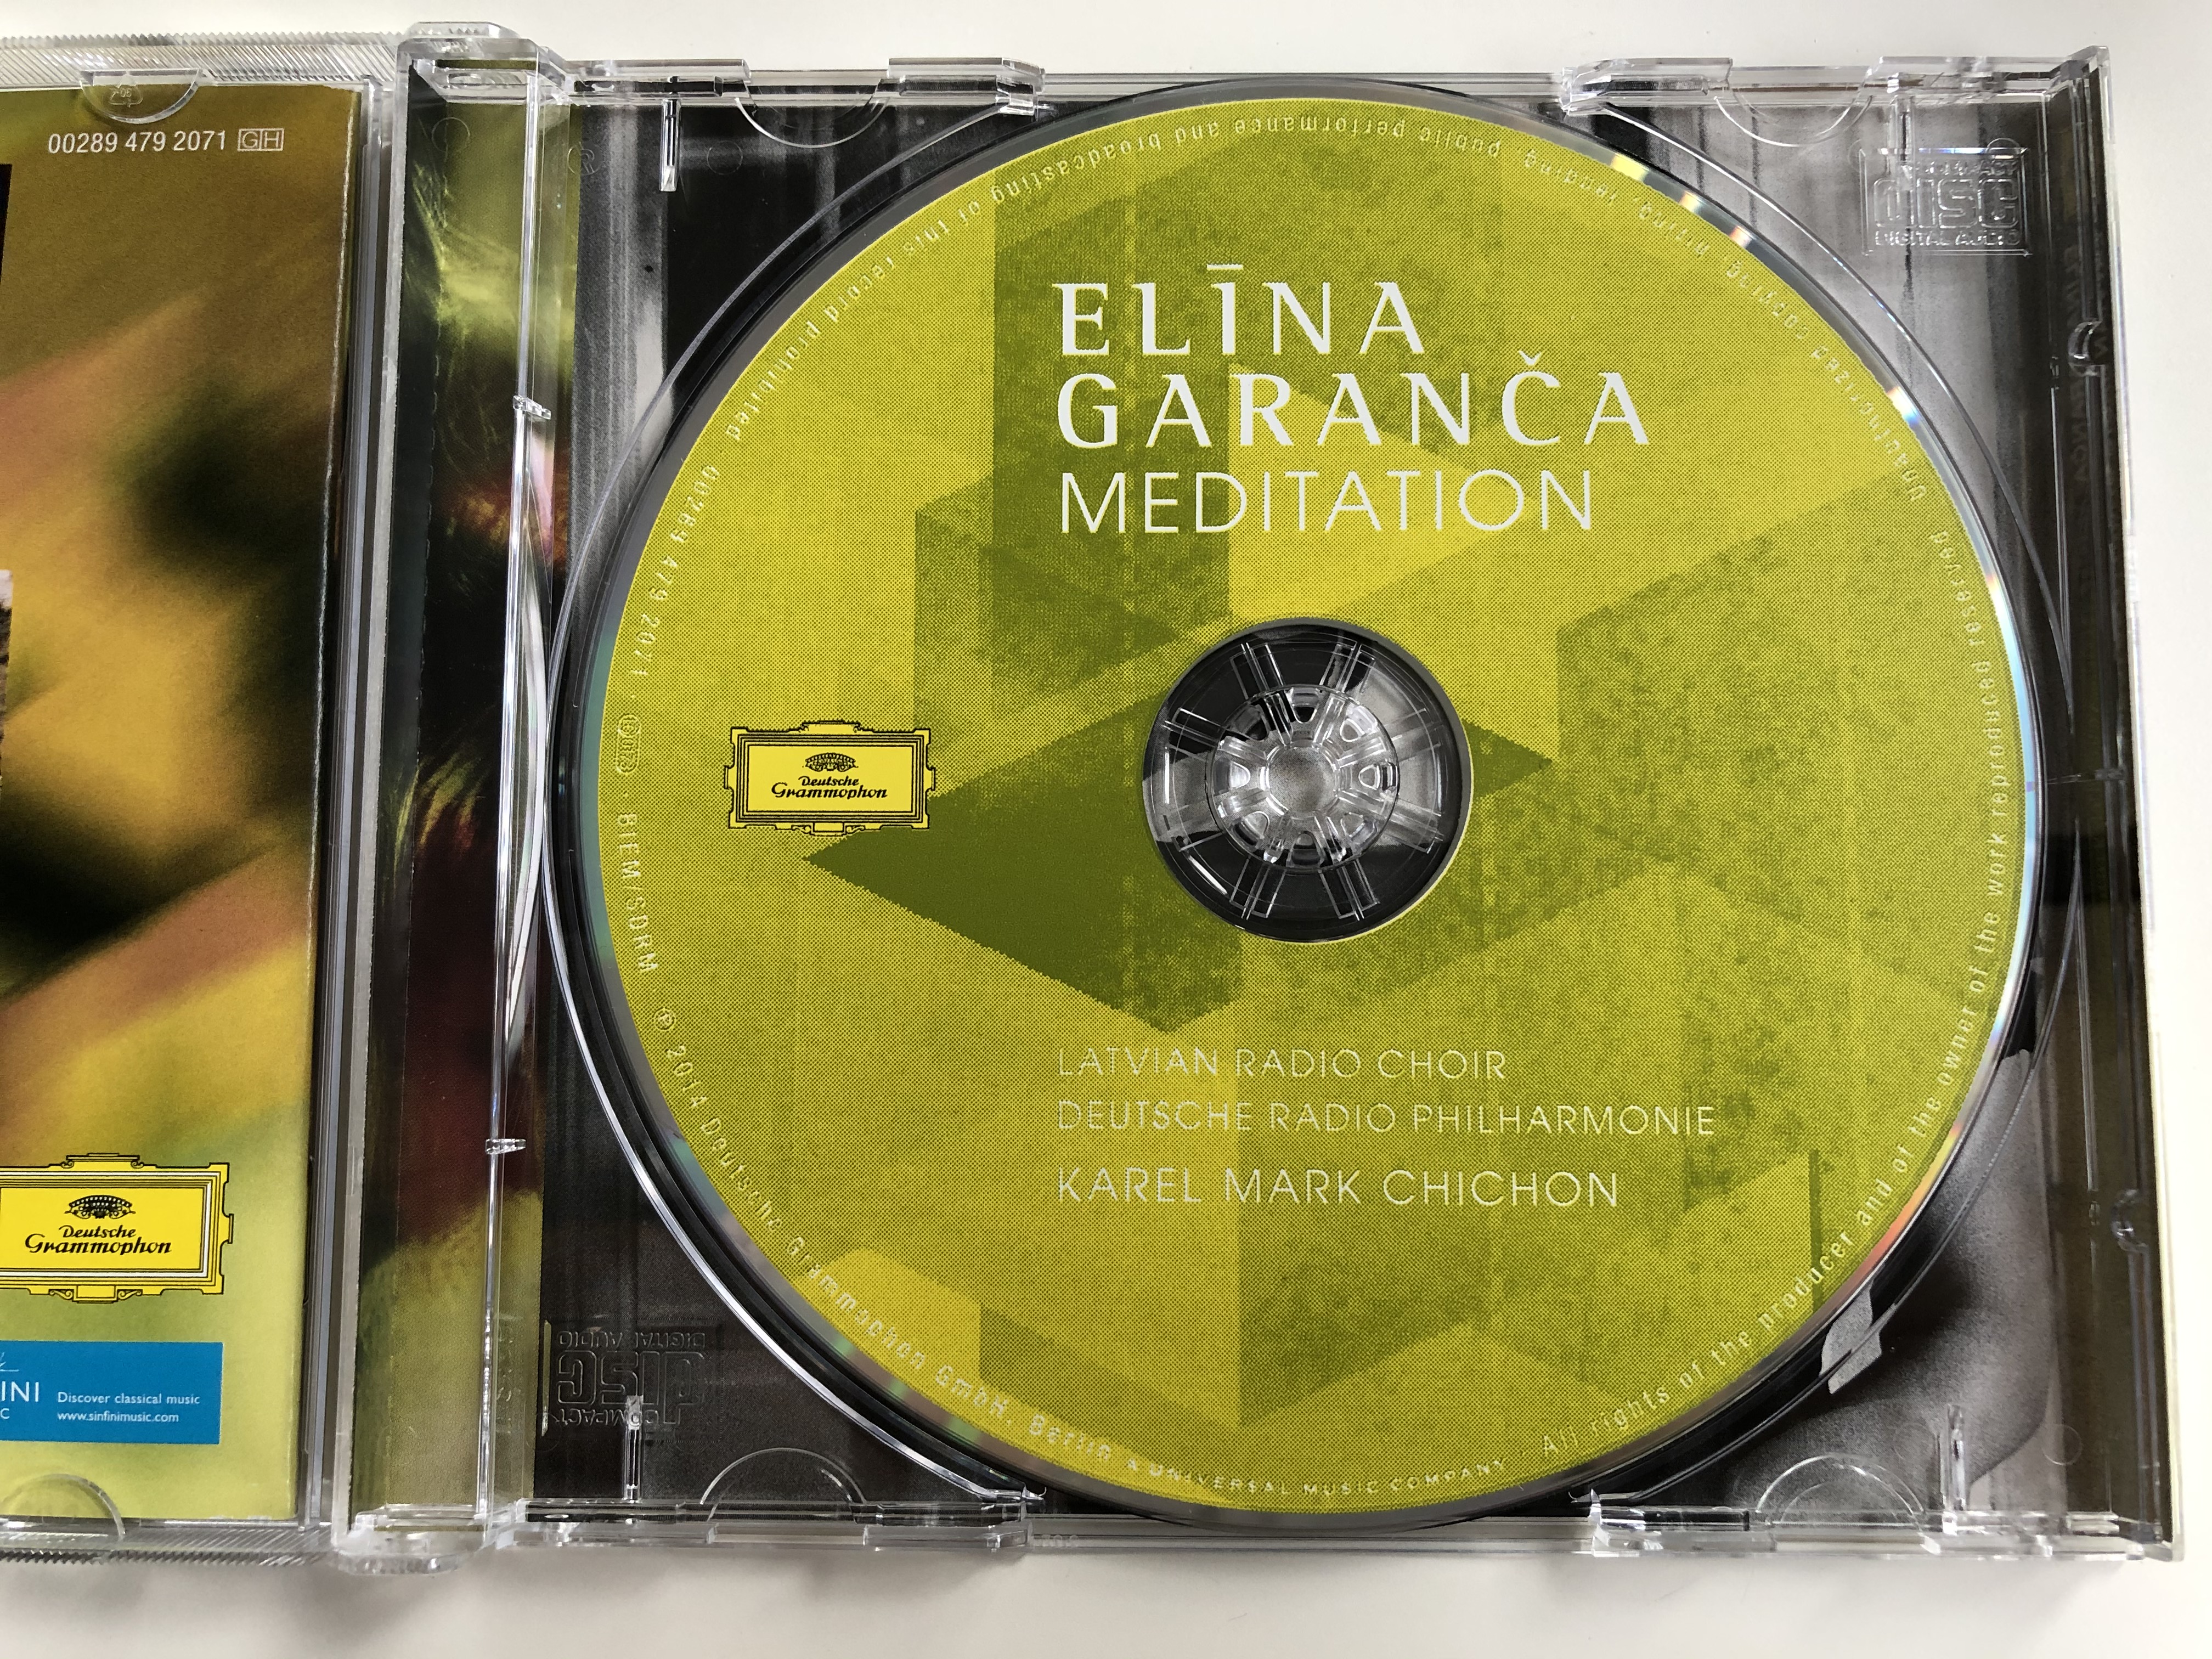 el-na-garan-a-meditation-deutsche-grammophon-audio-cd-2014-479-2071-2-.jpg